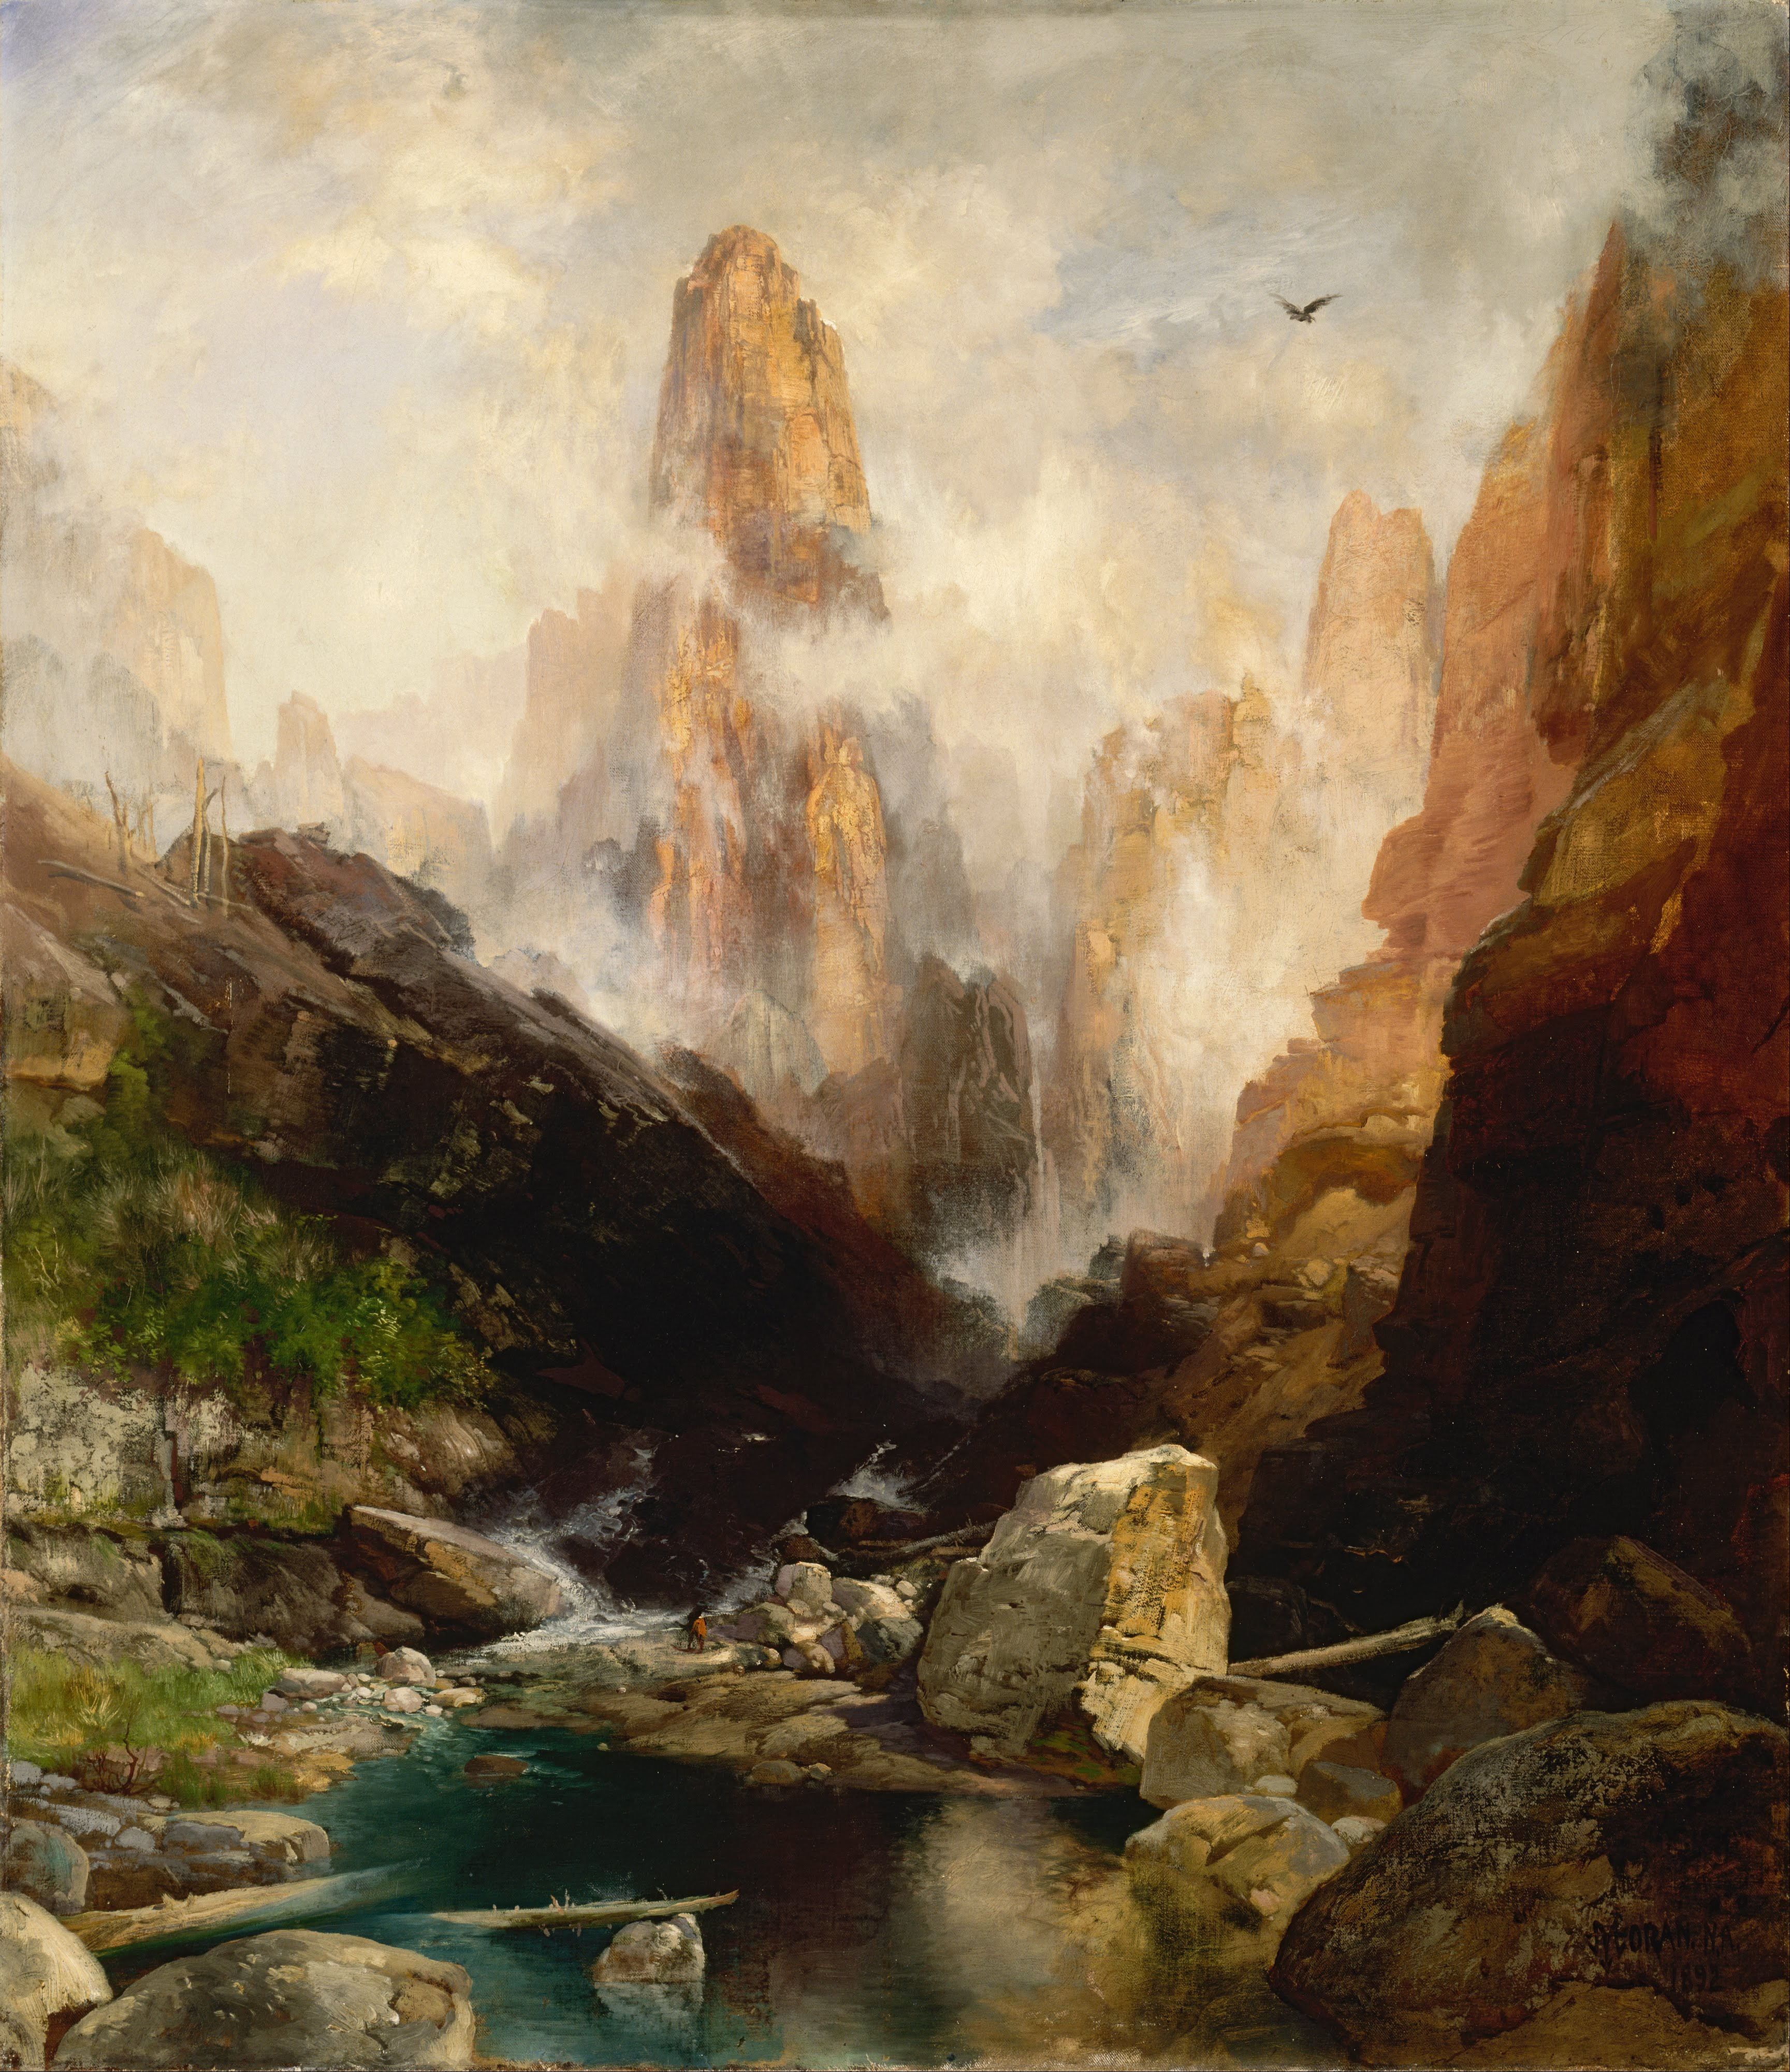 Thomas Moran - Mist in Kanab Canyon, Utah - Google Art Project